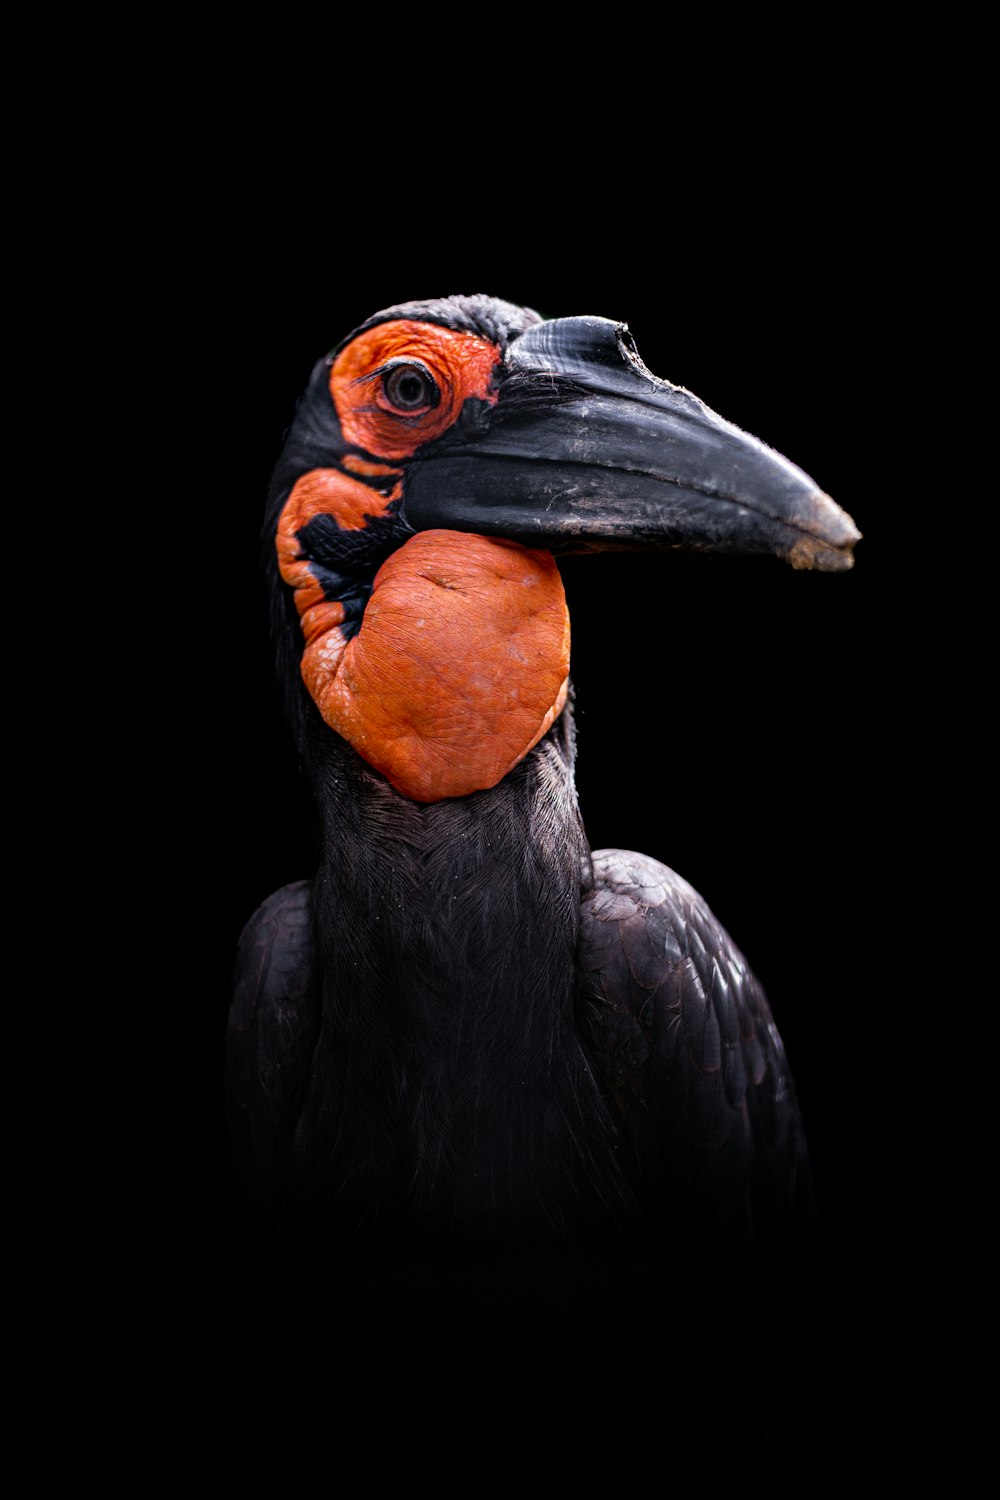 a black bird with a red beak